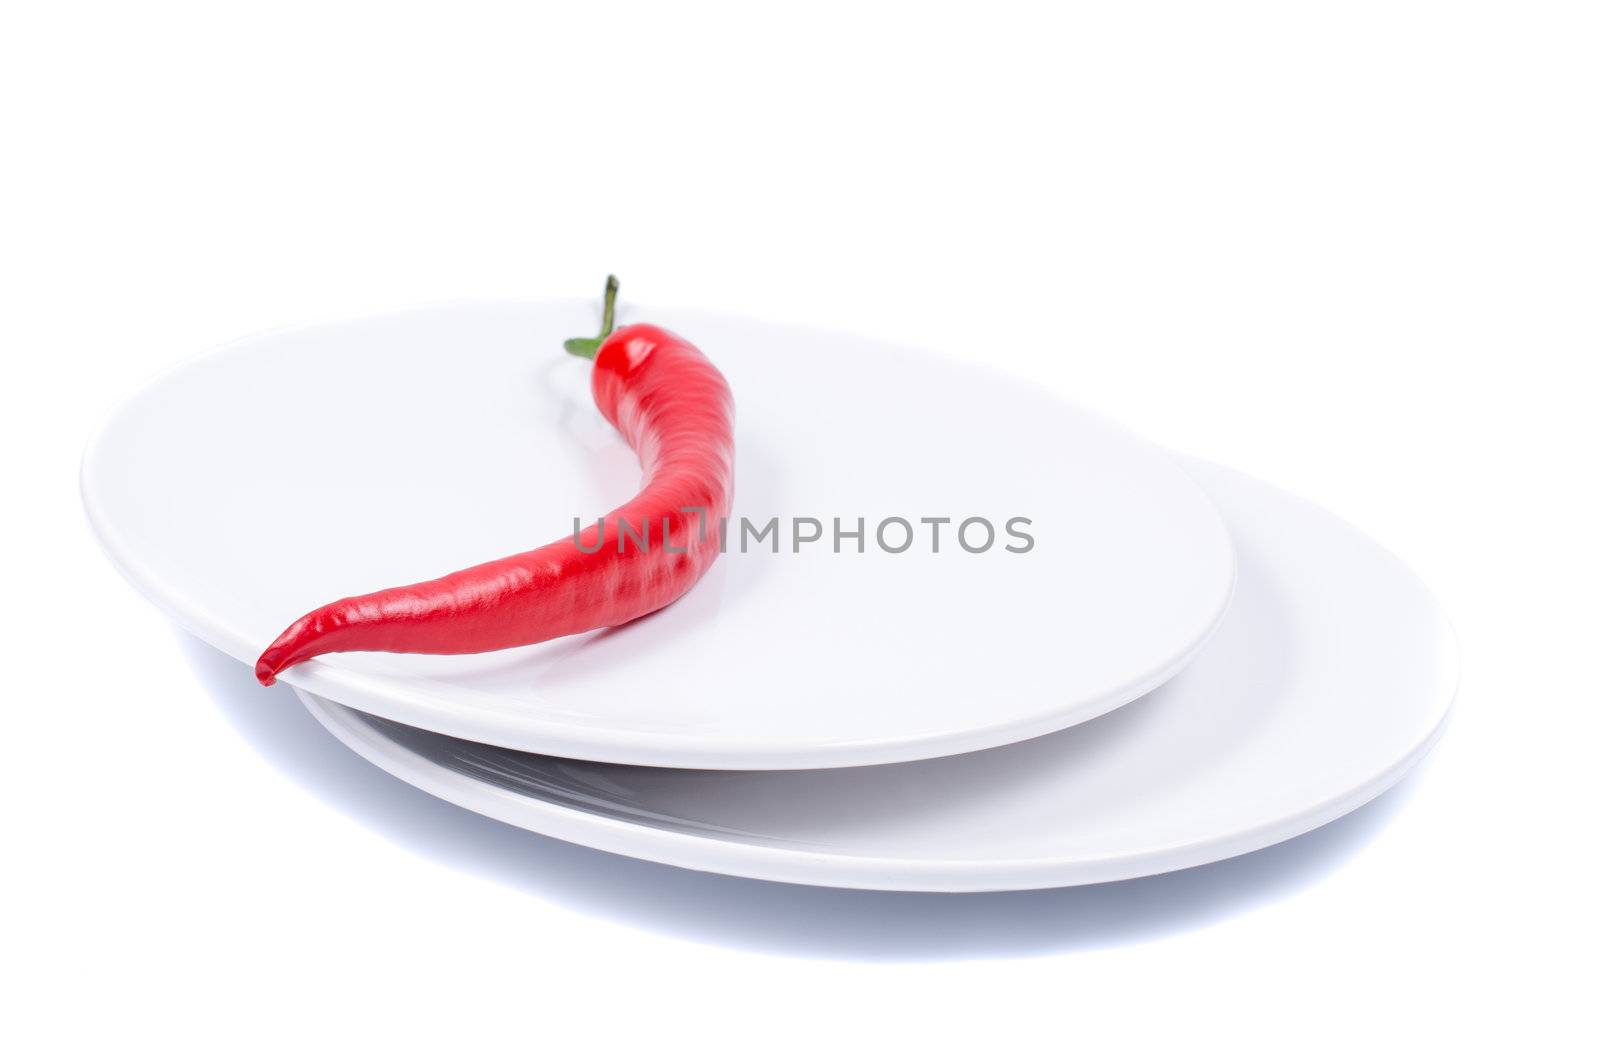 Chili pepper on plate by Nanisimova